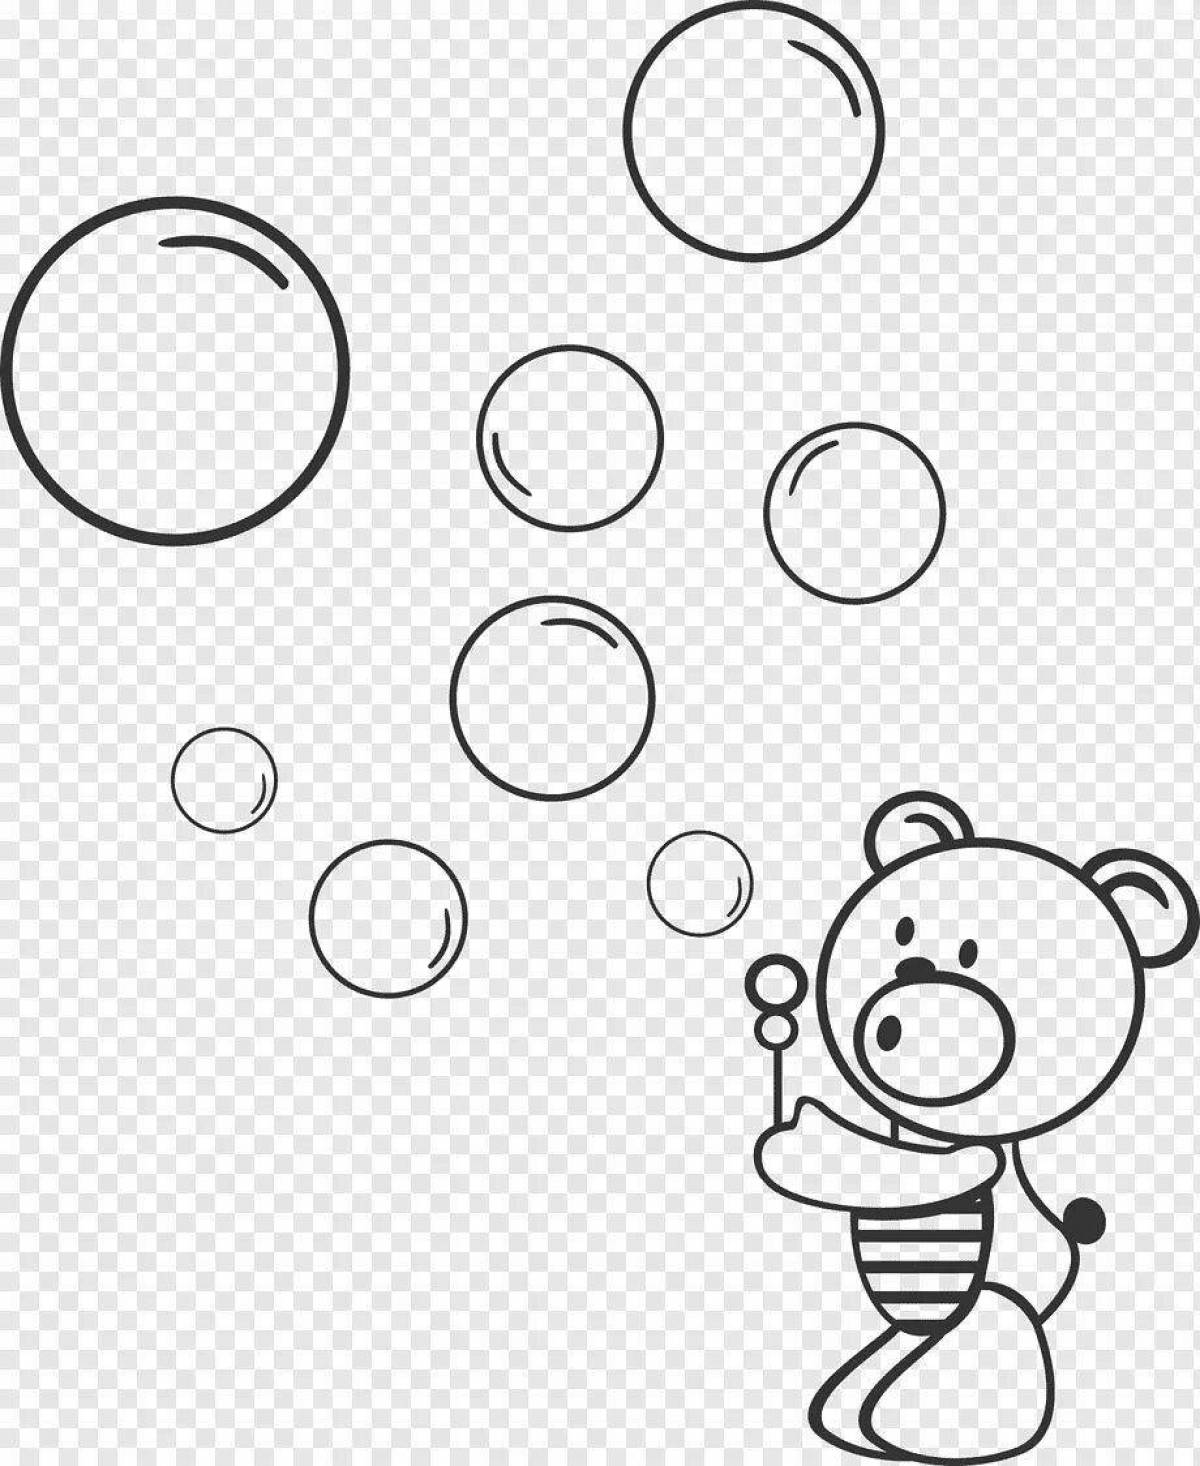 Dazzling bubbles coloring page